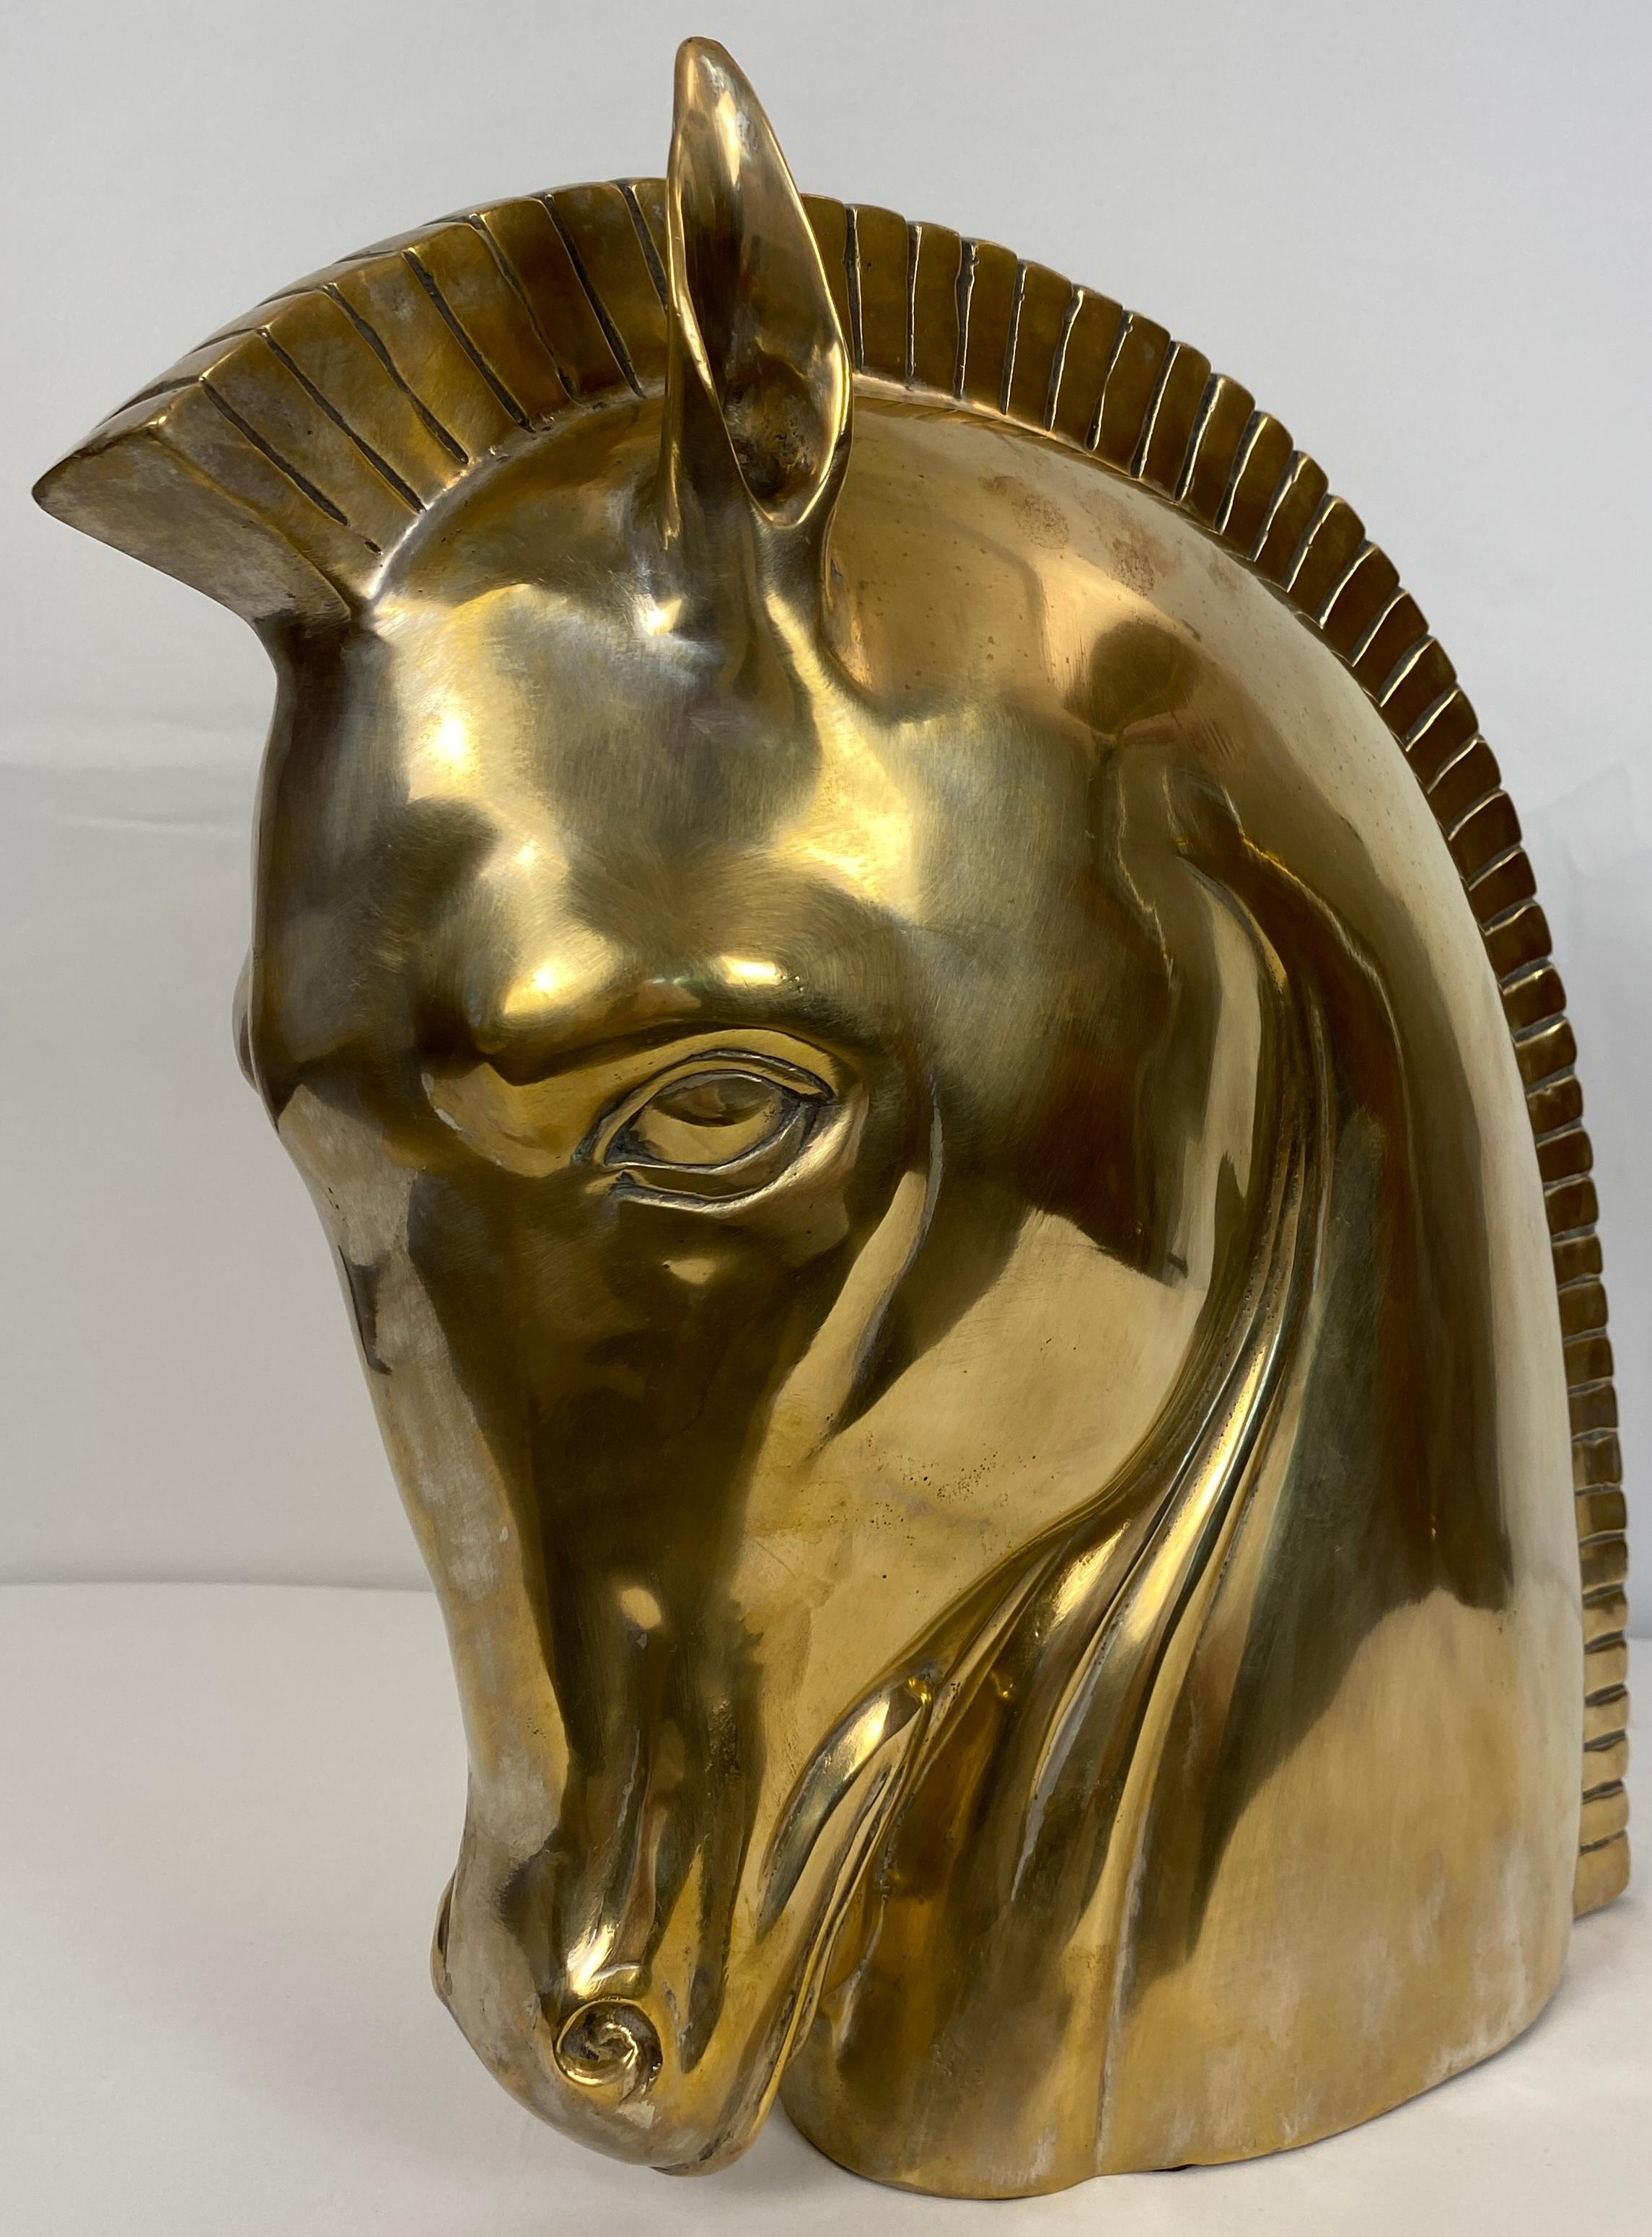 trojan horse figurine